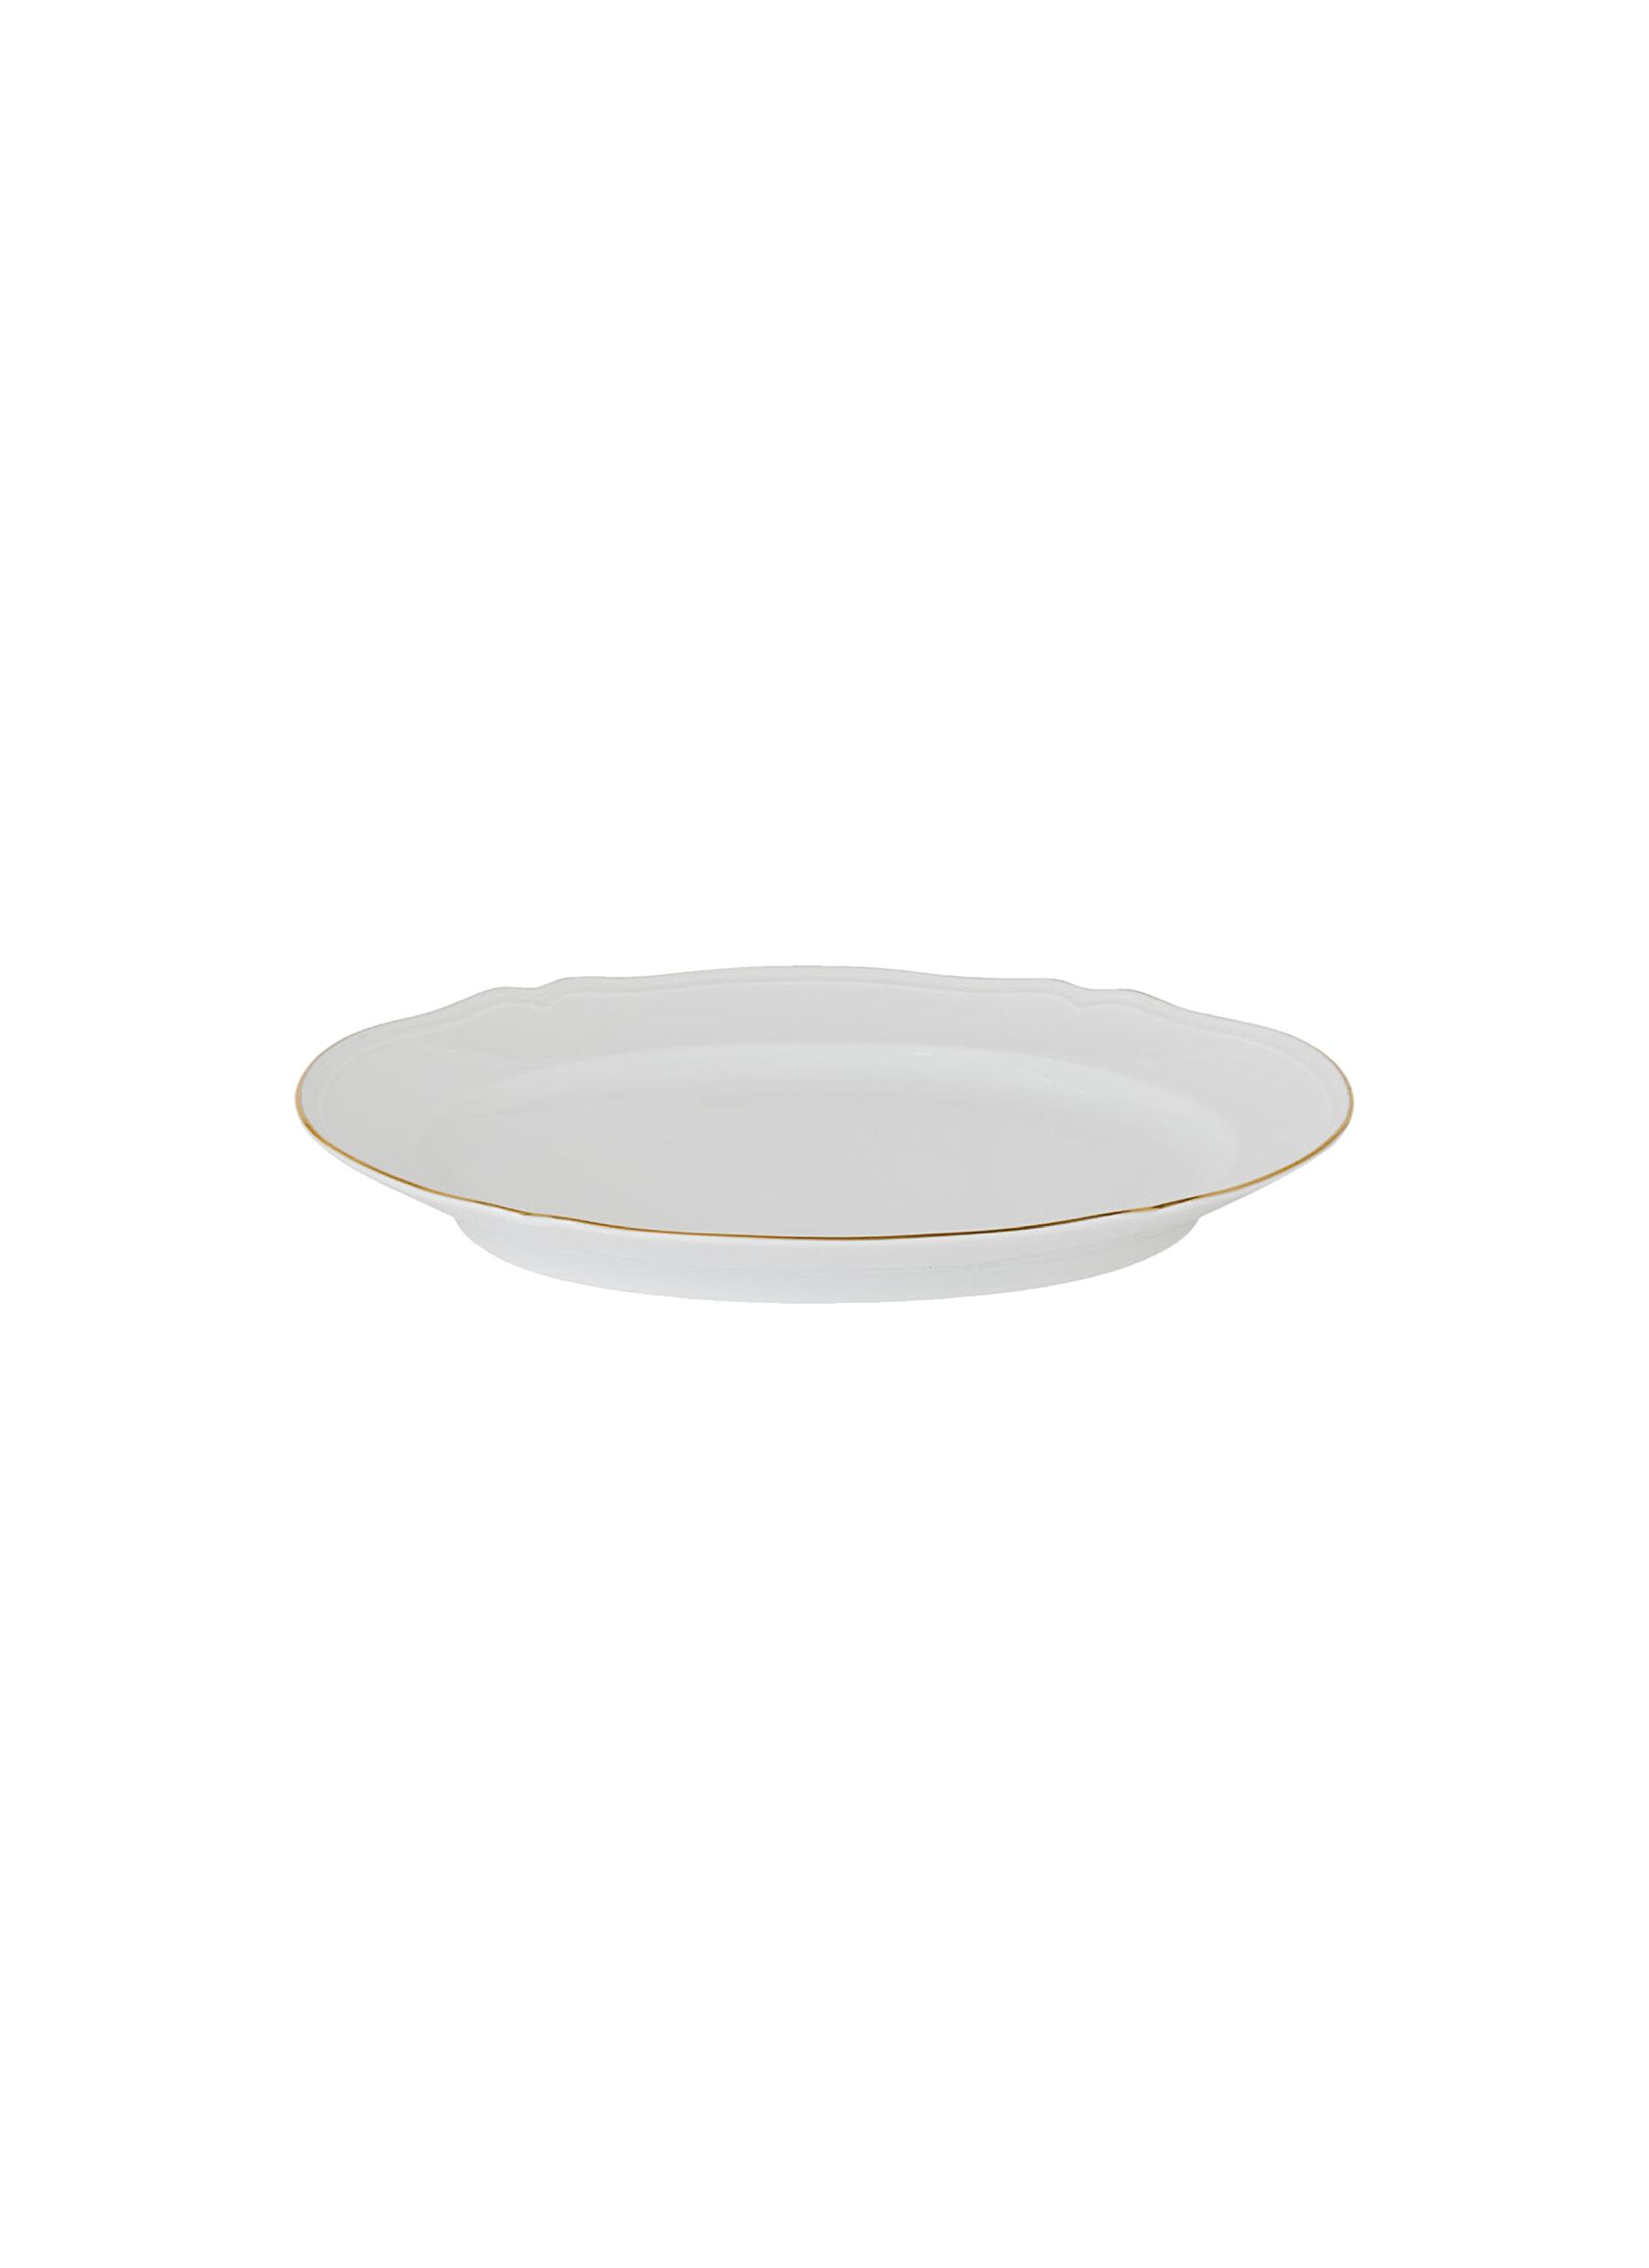 Corona Porcelain Flat Oval Platter